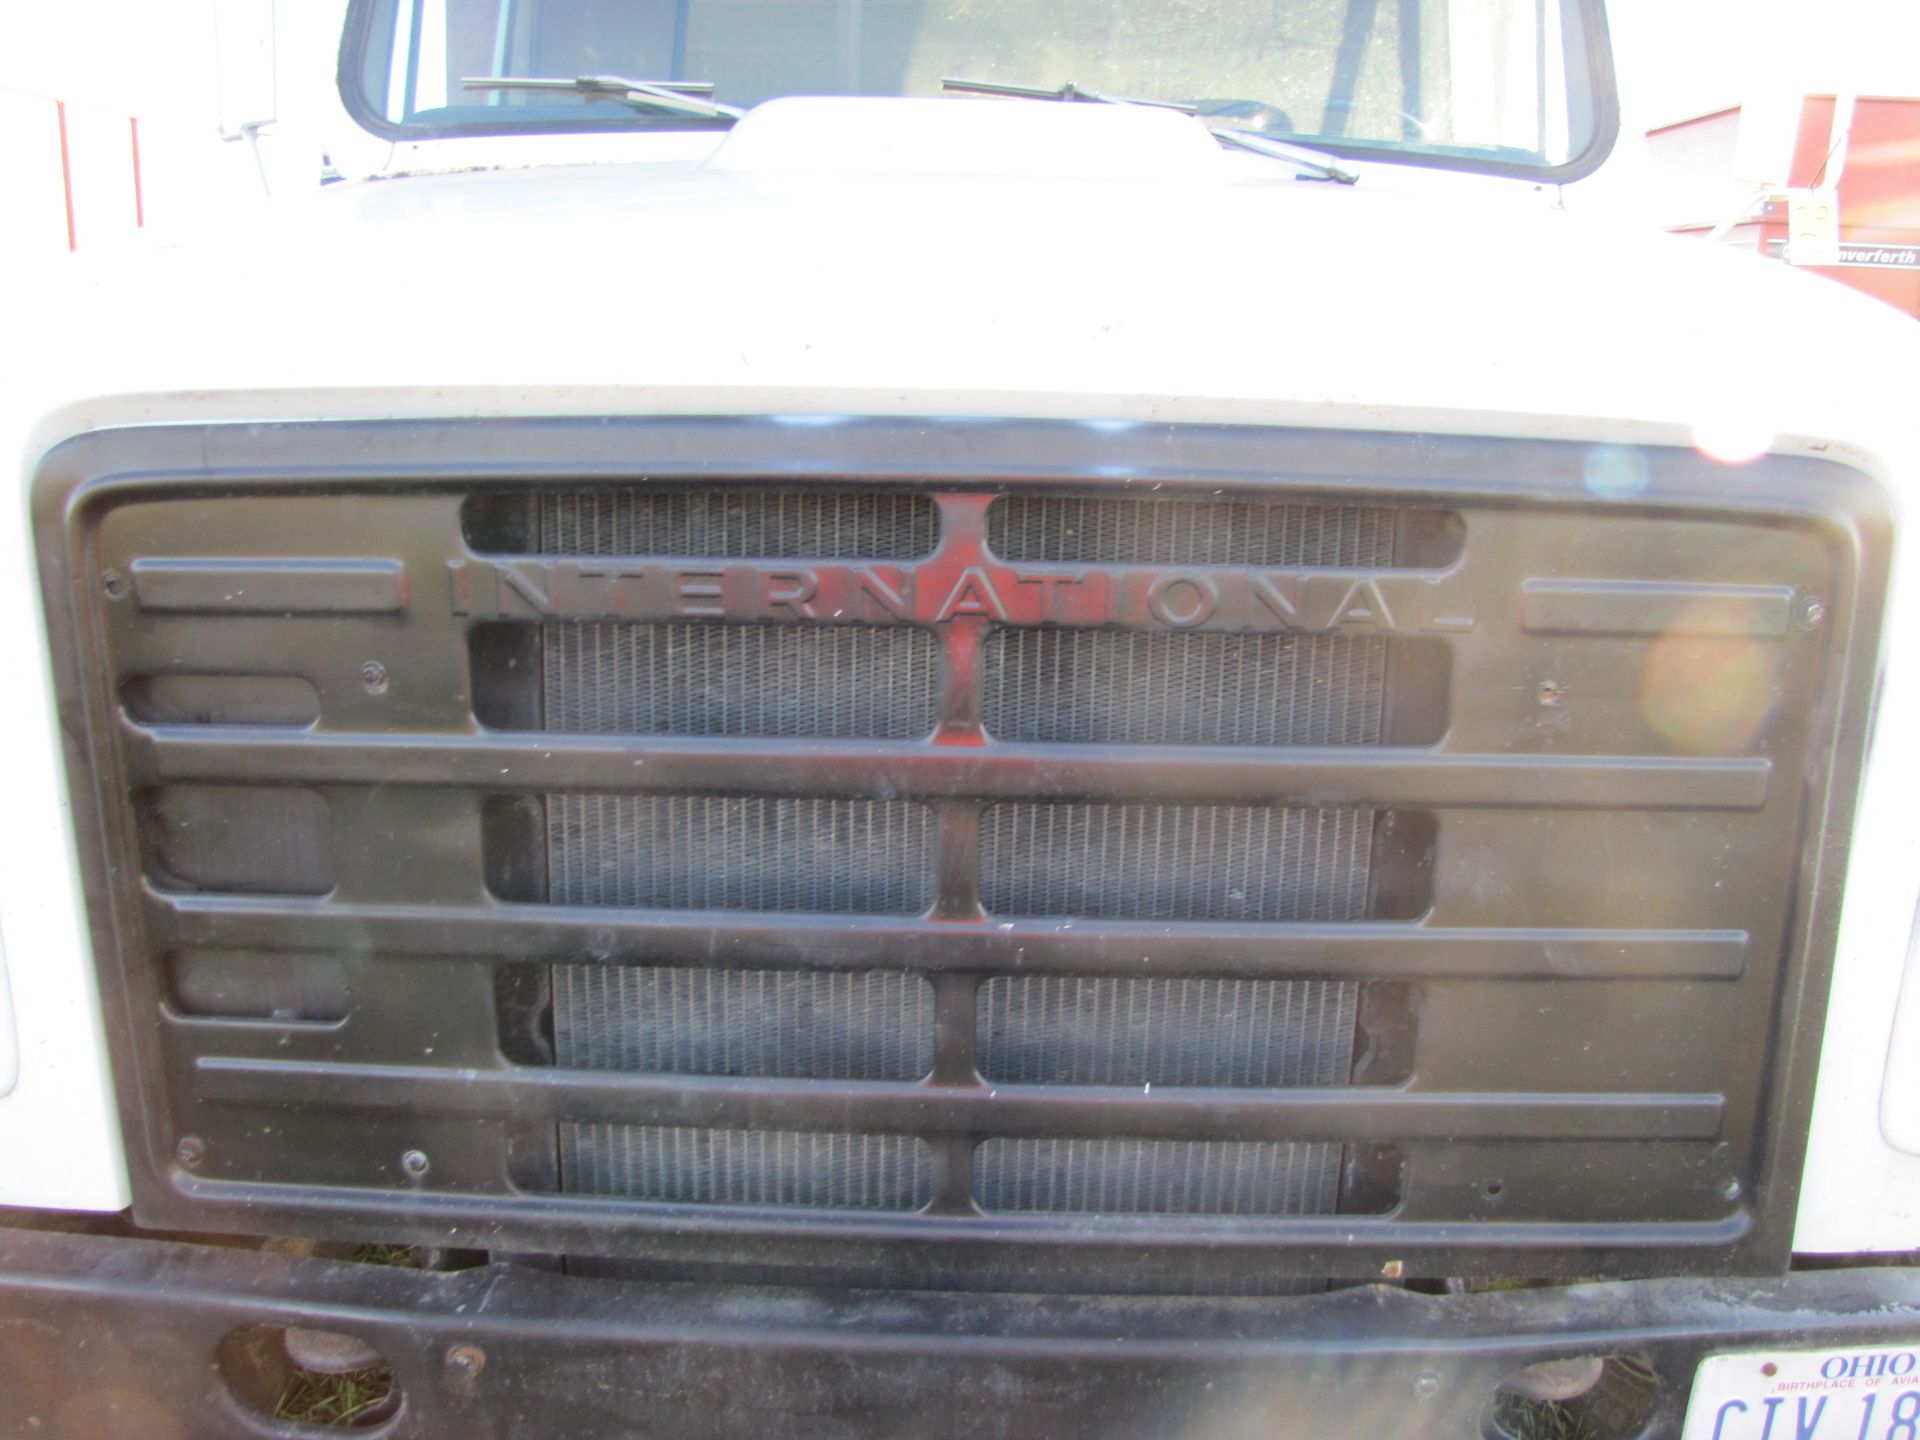 1981 International S1700 grain truck w/ 15 ½’ bed & hoist, 9.00-20 tires, 5 speed hi-lo, V-8 gas - Image 19 of 48